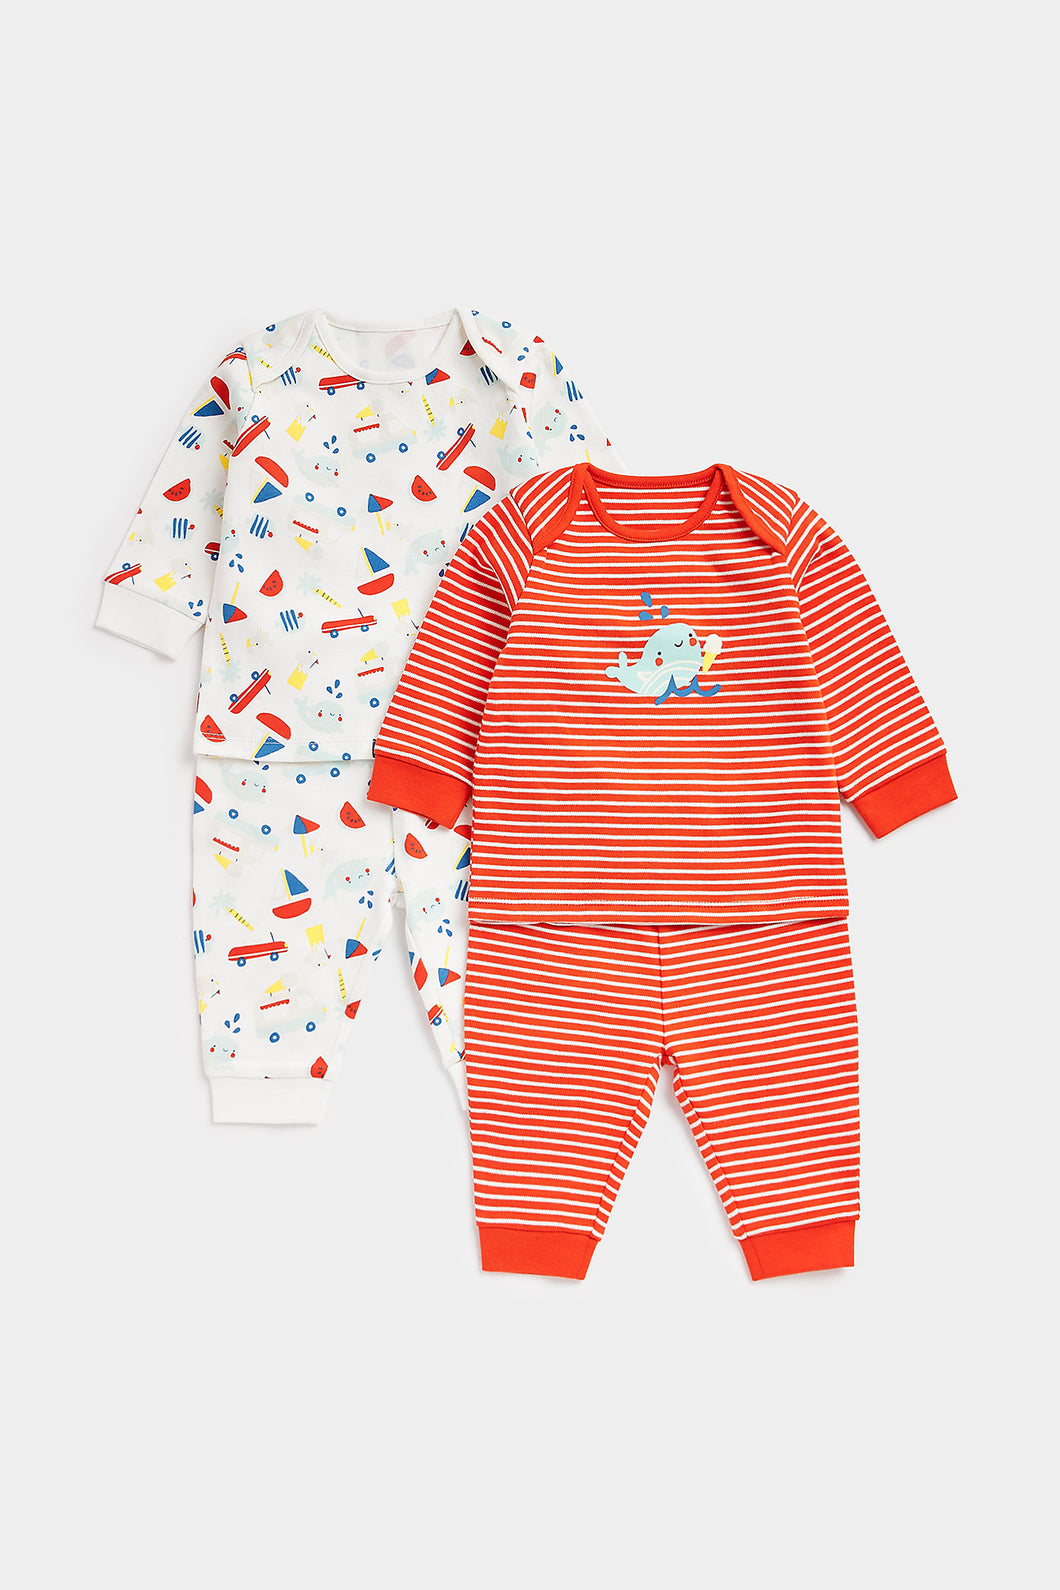 Mothercare Whale Beach Pyjamas - 2 Pack